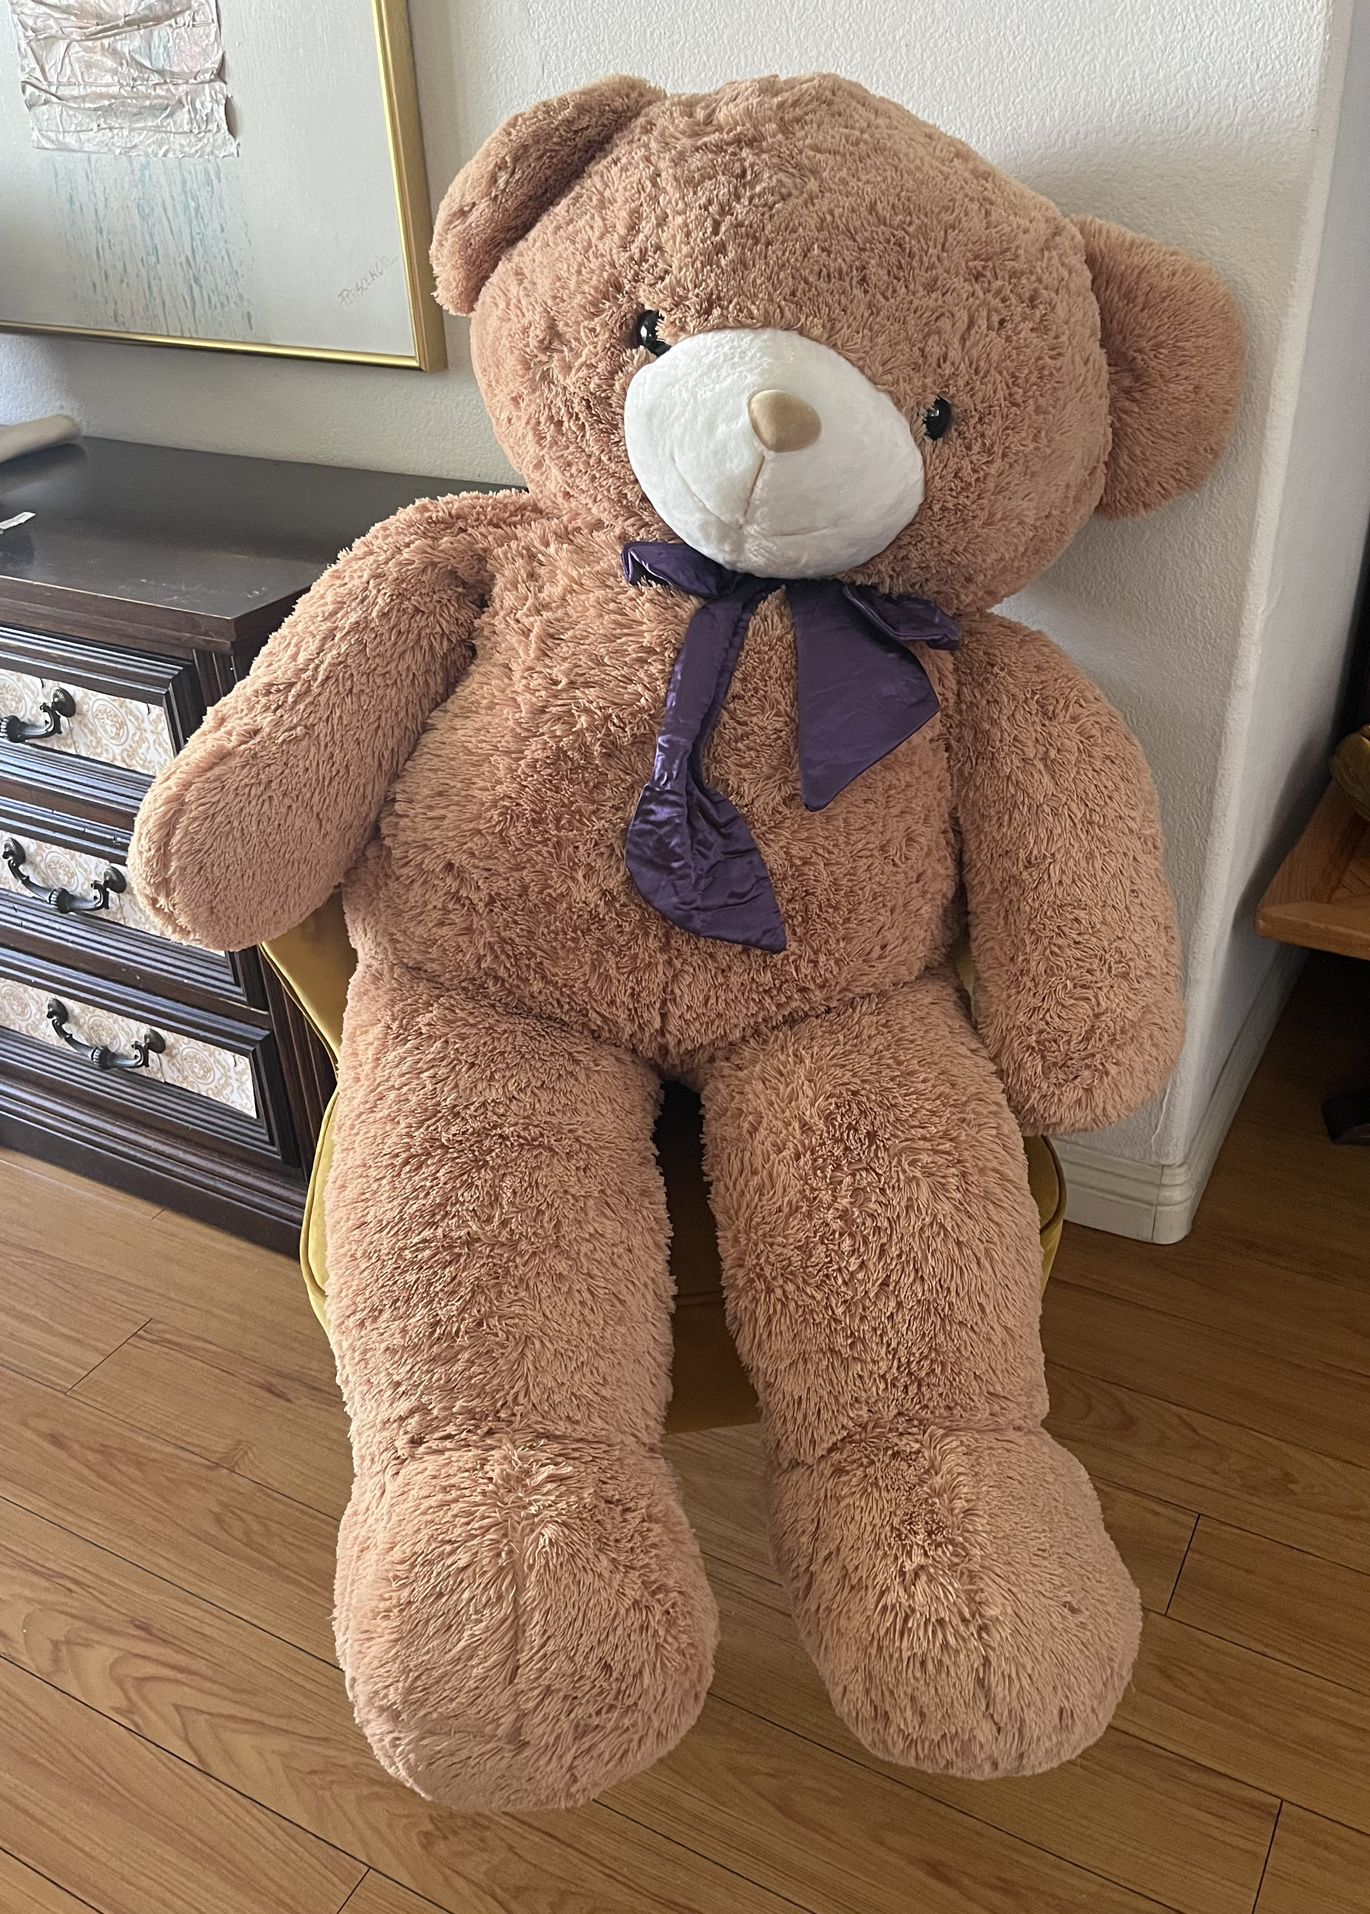 Costco Teddy Bear Needs New Home 